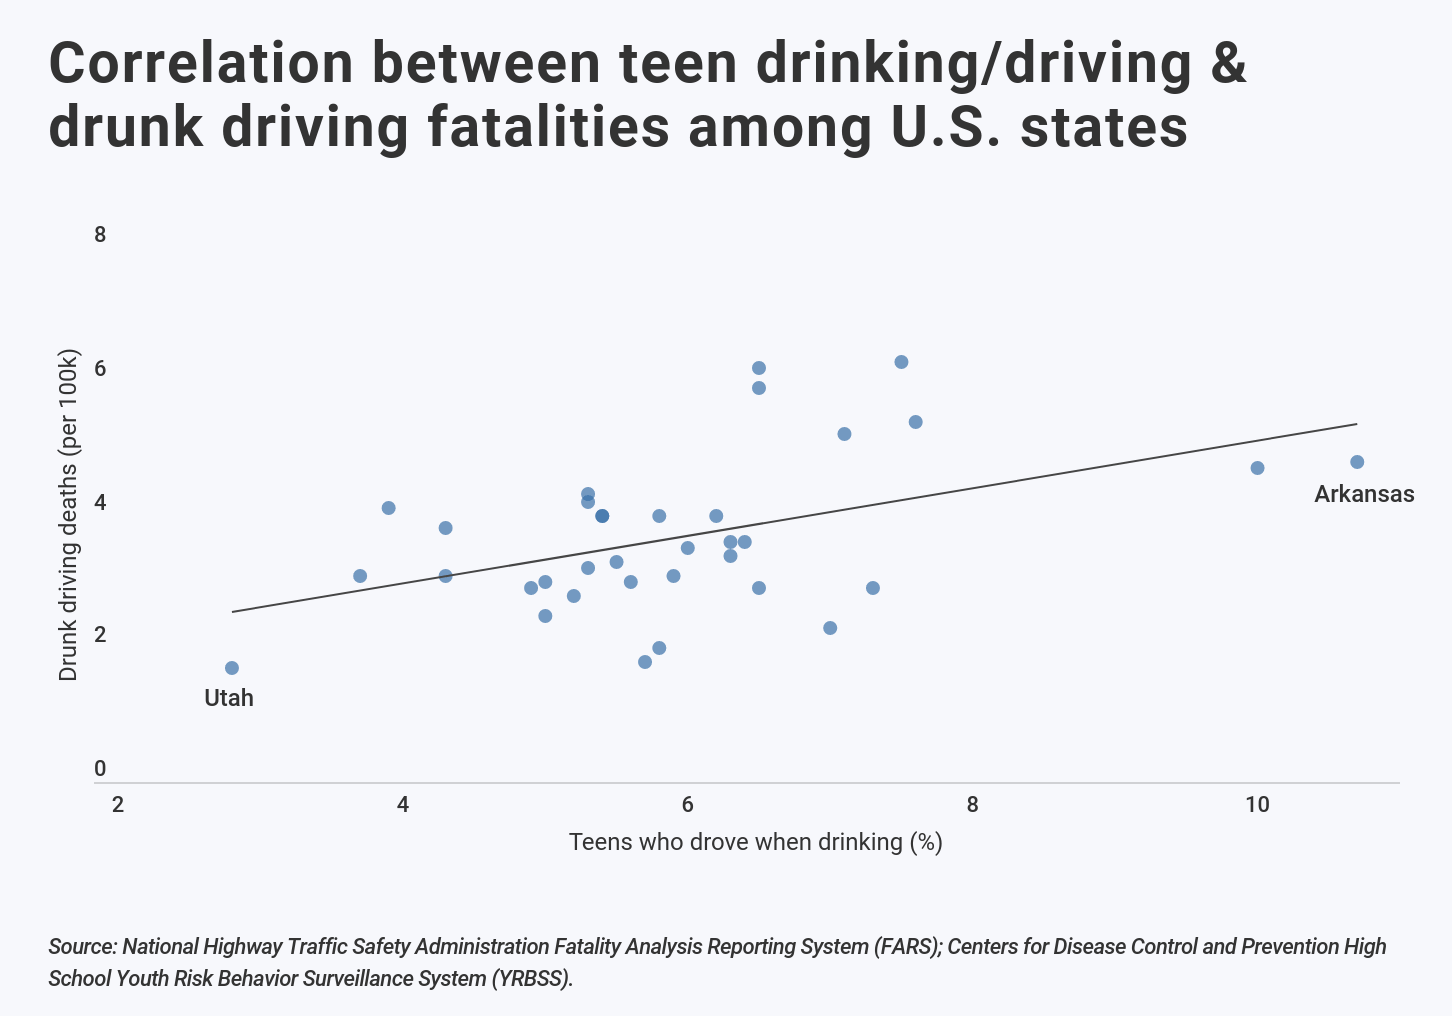 Correlation between underage drinking and driving fatalities